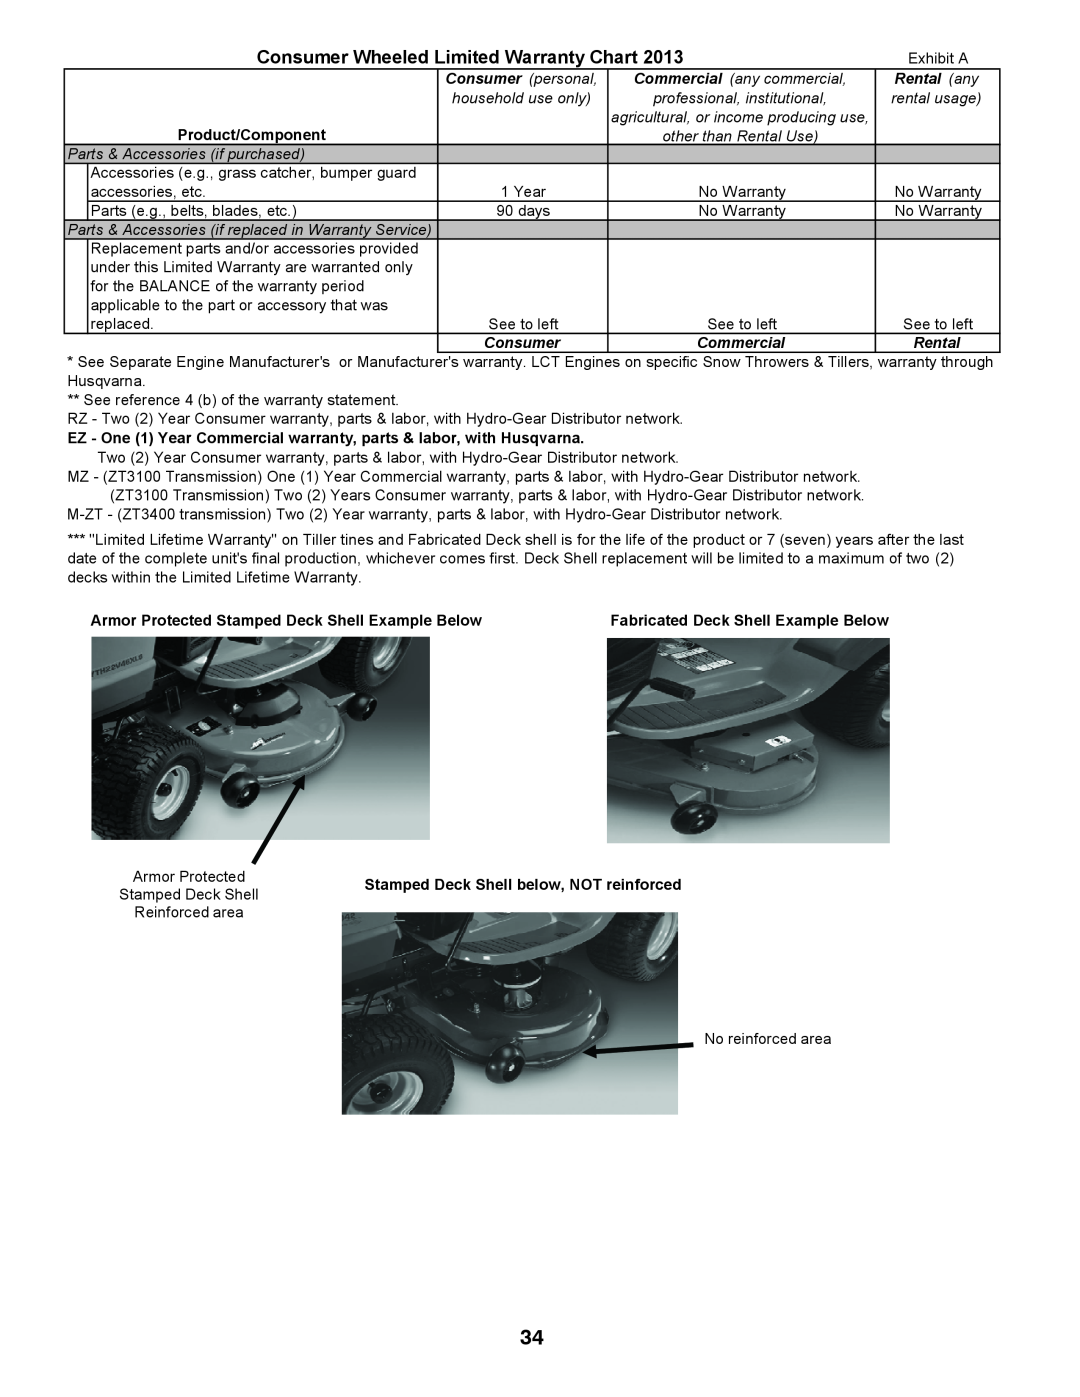 Husqvarna GT48XLSi warranty Consumer Wheeled Limited Warranty Chart, Product/Component 